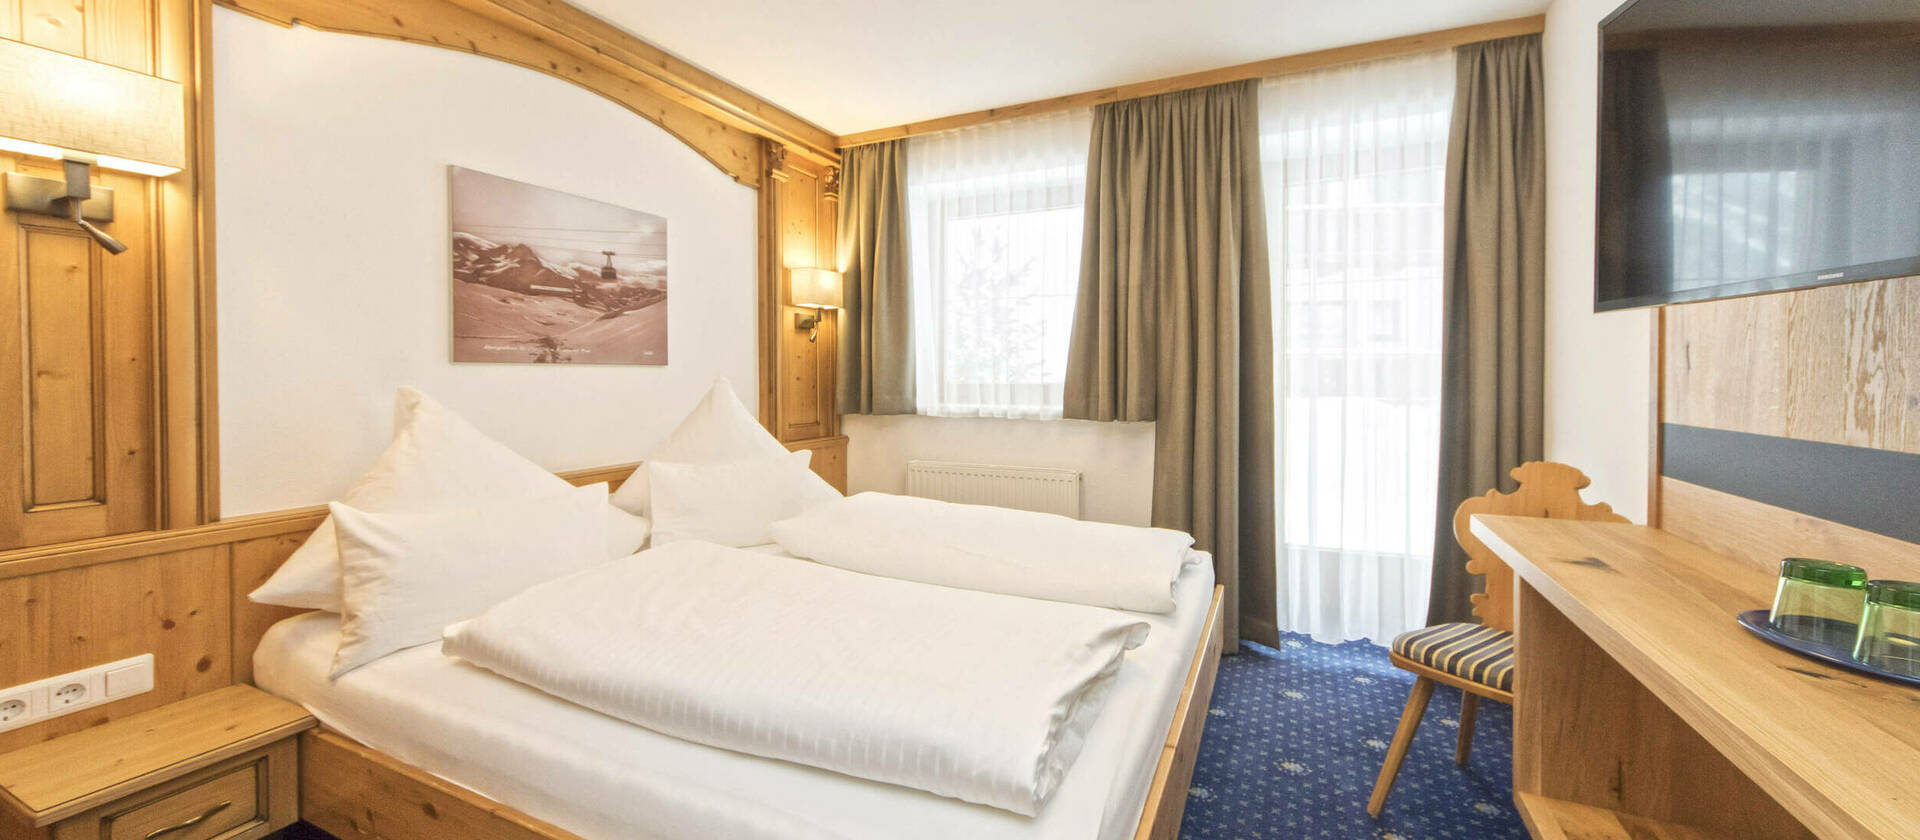 Room Hotel Garni Bellevue 